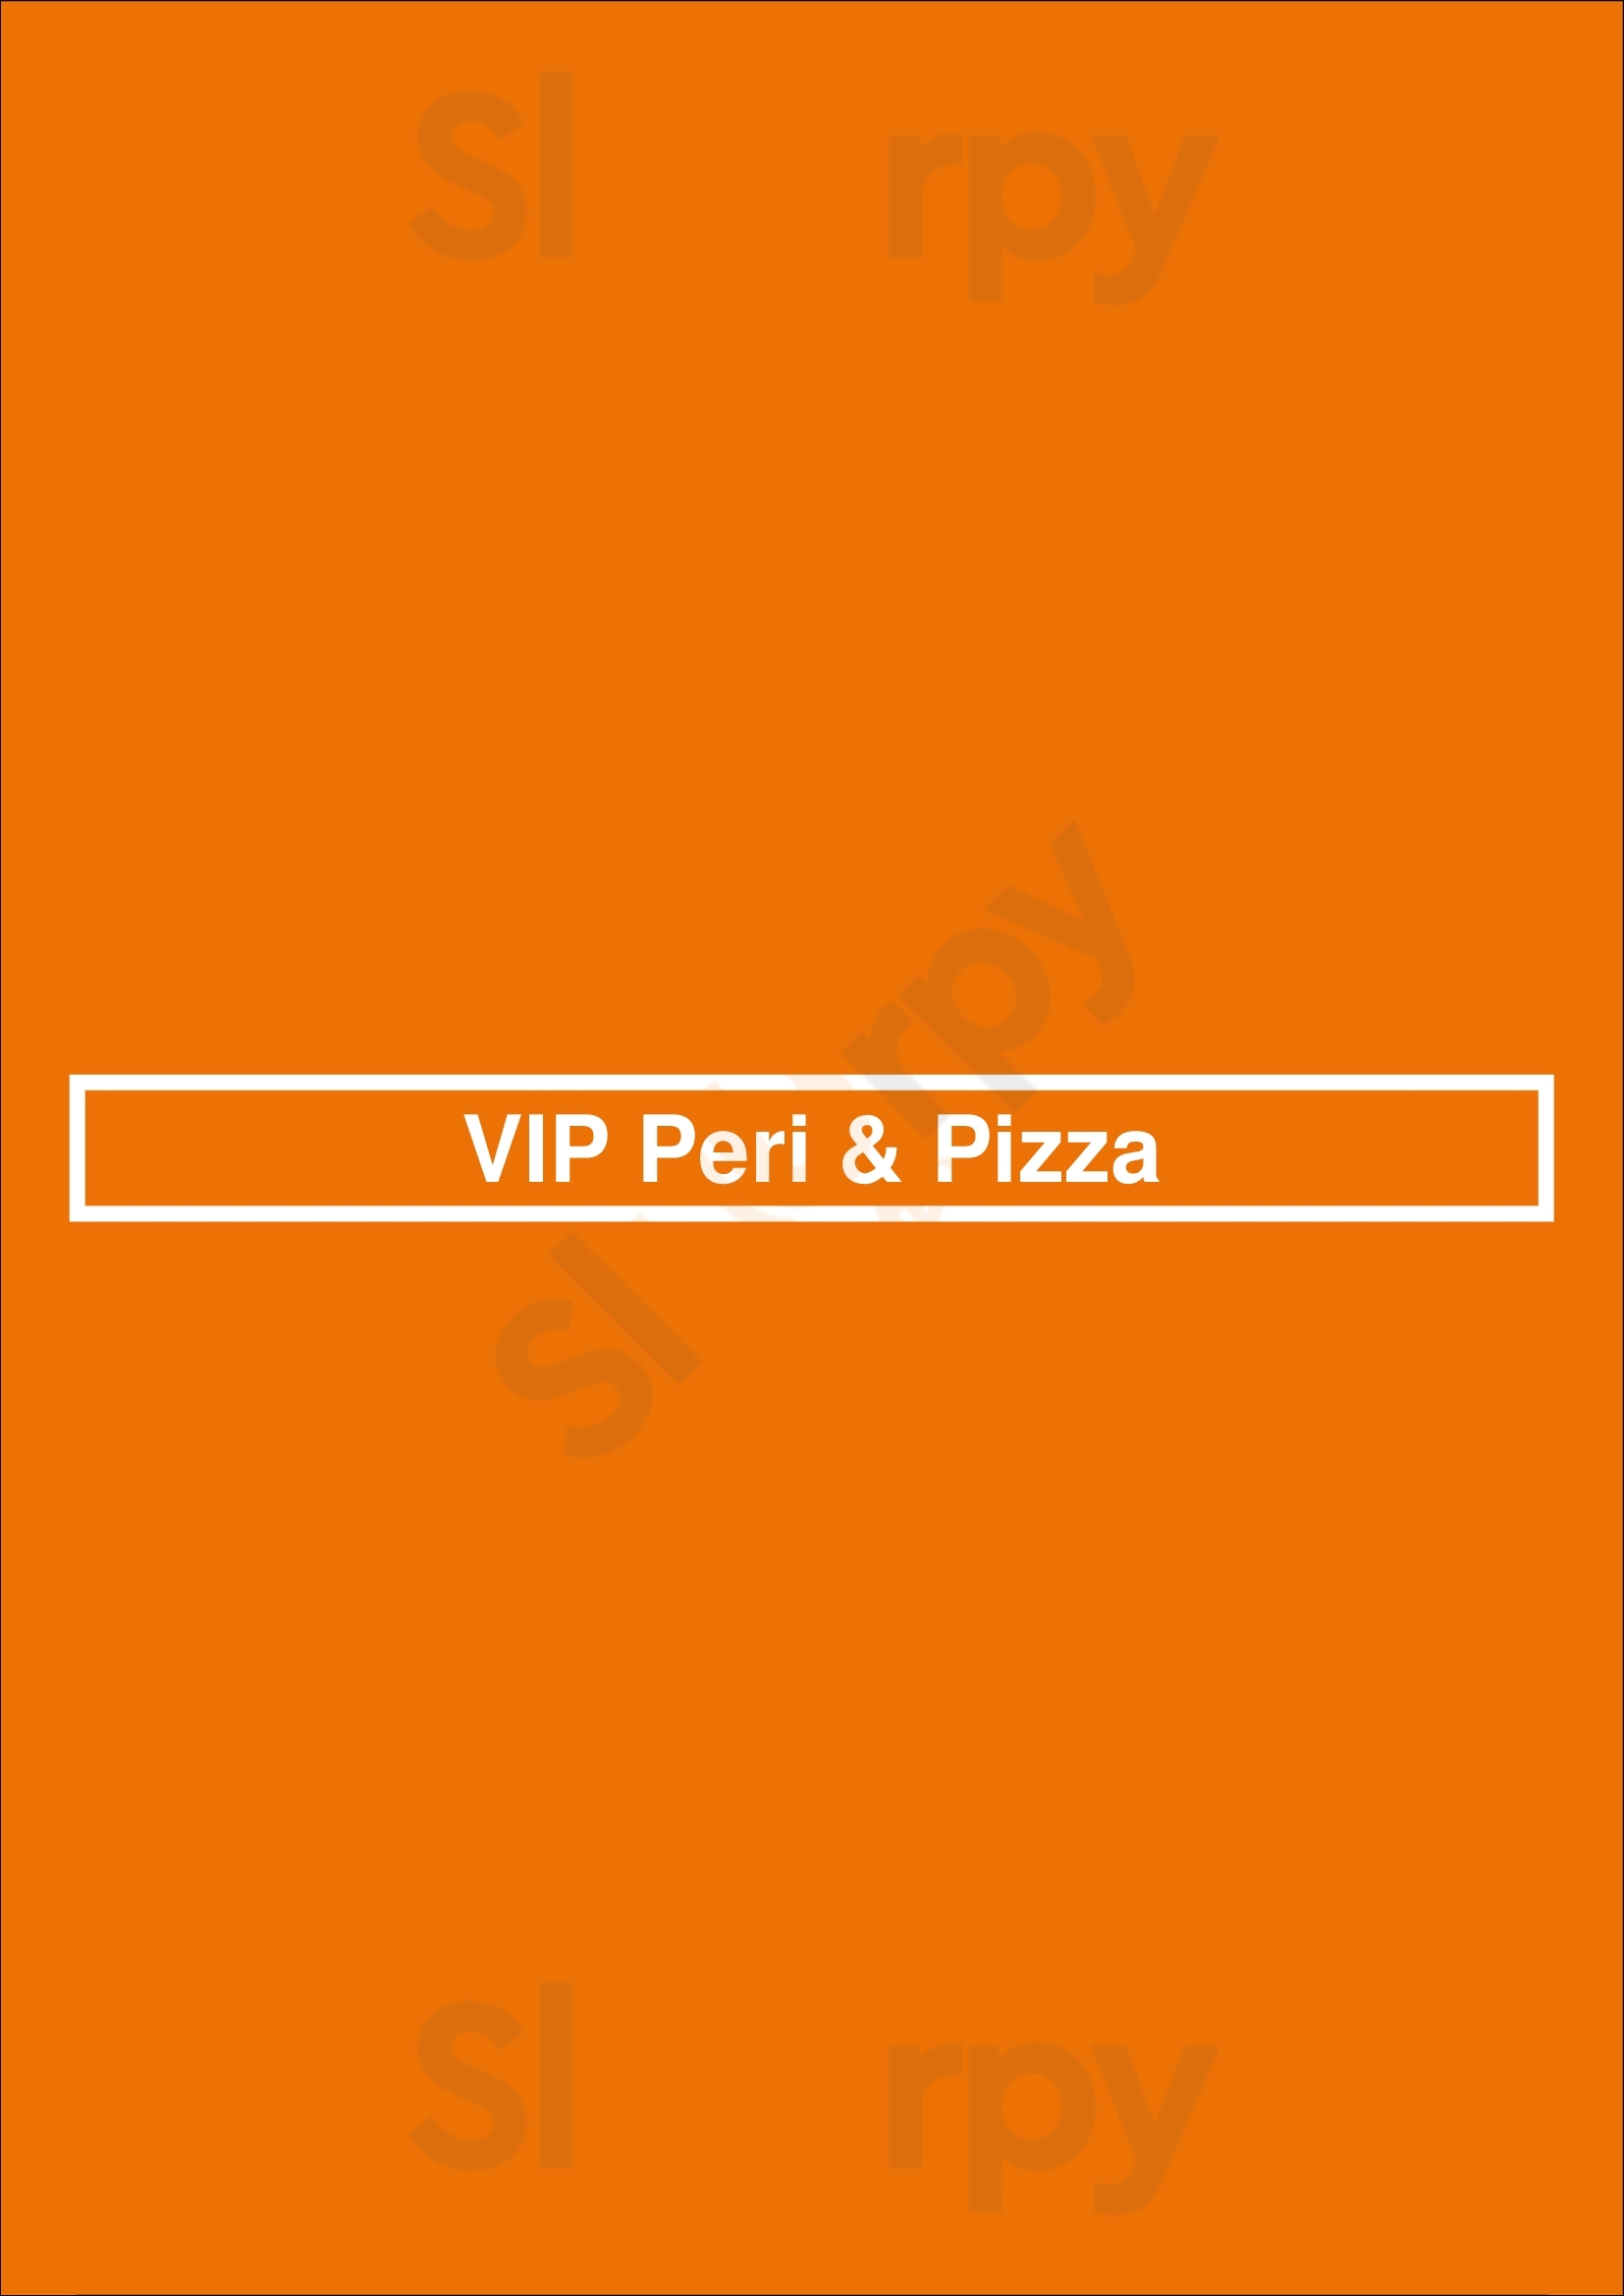 Vip Peri & Pizza Tipton Menu - 1